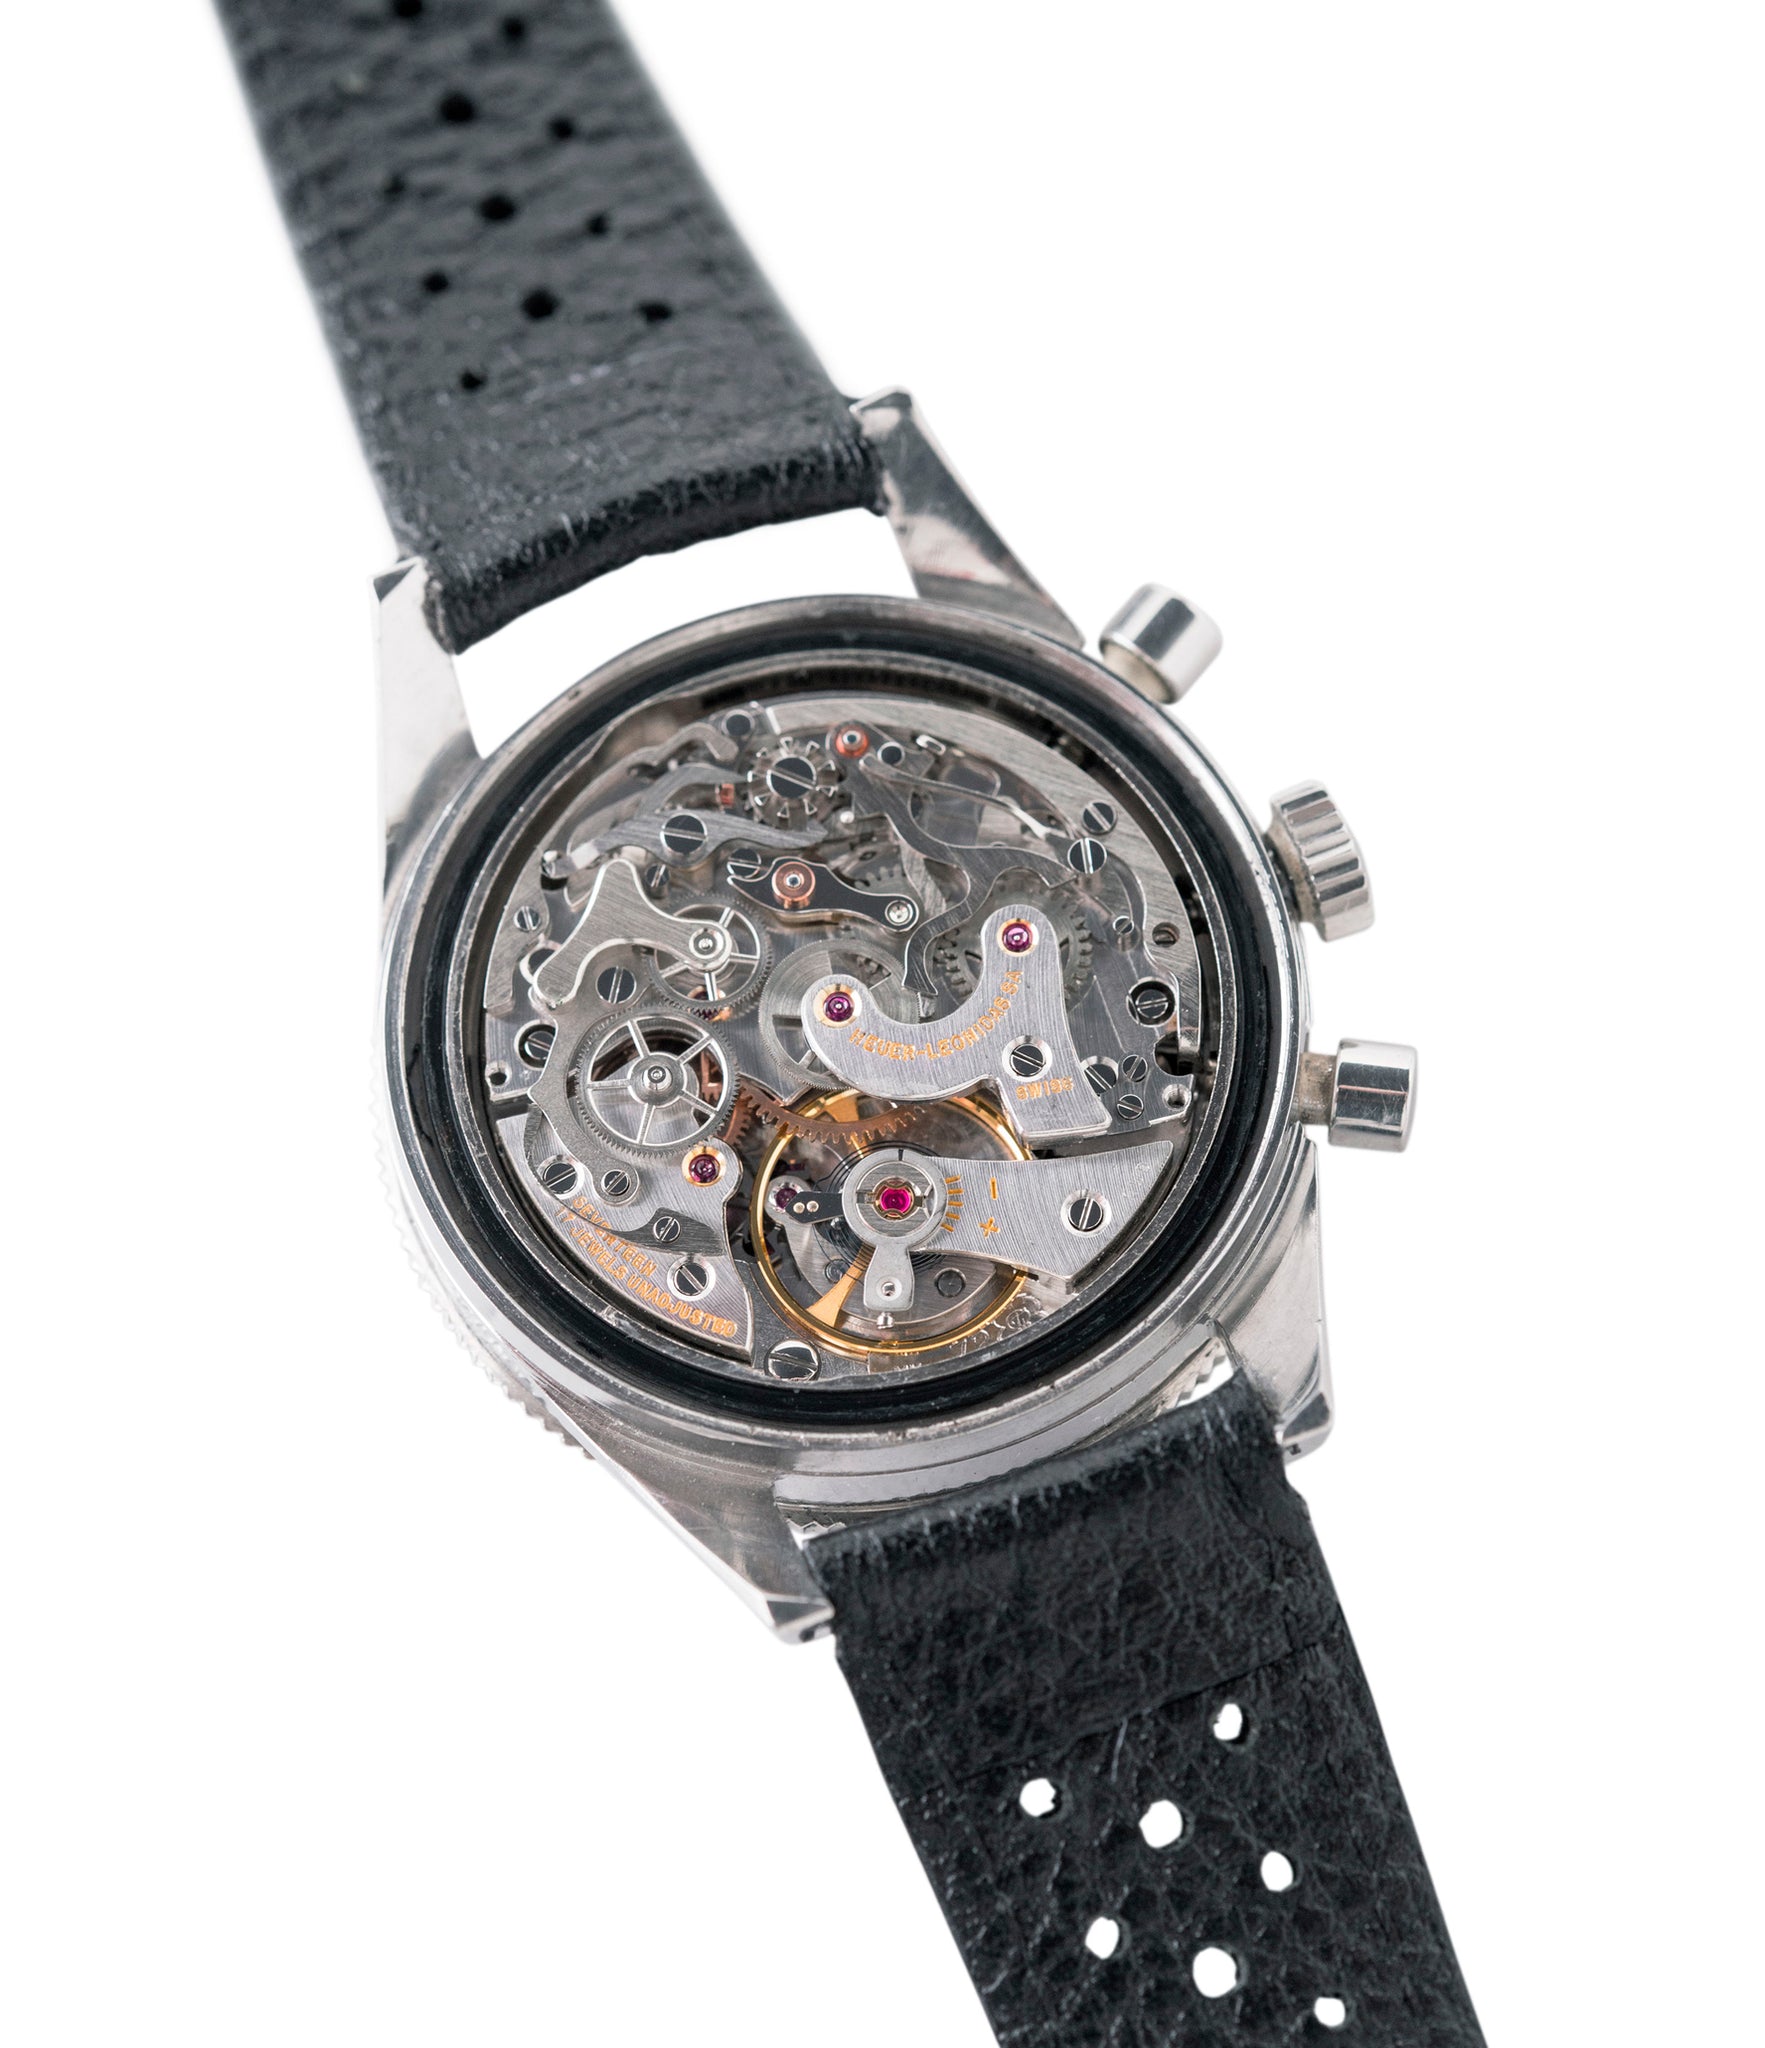 Valjoux 72 movement vintage Heuer Autavia Rindt 2446 rare steel chronograph sport racing watch 